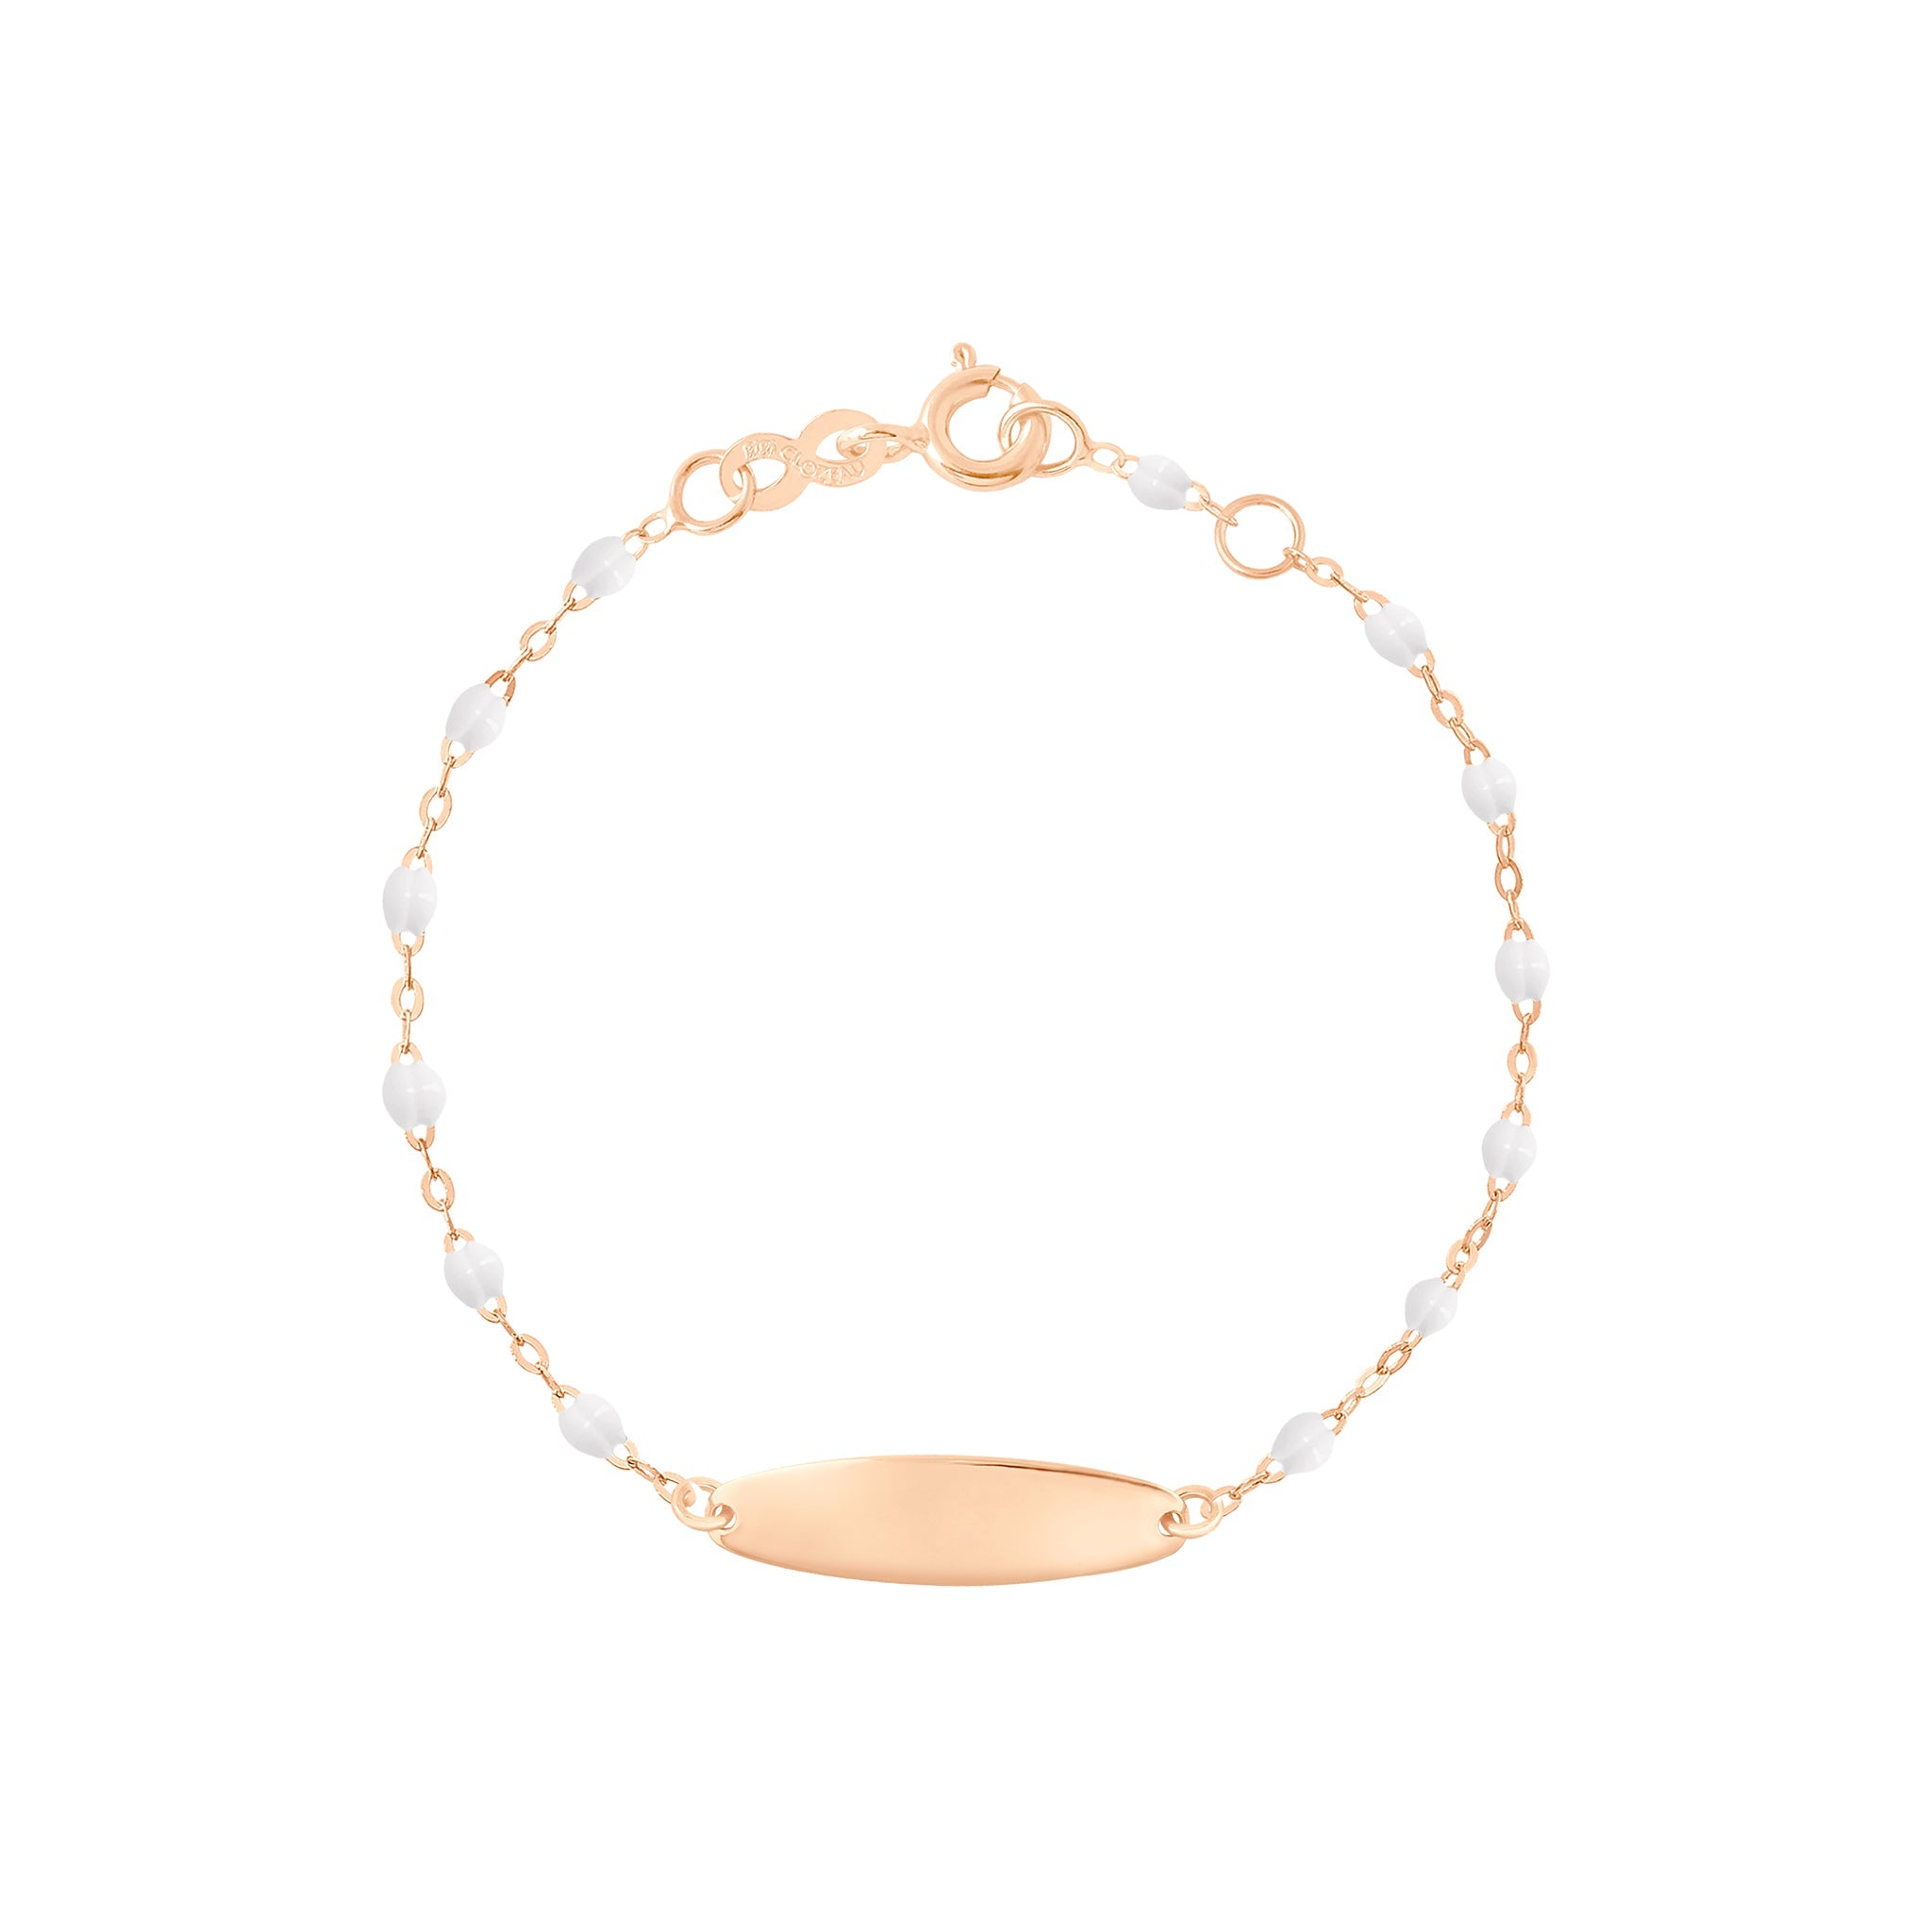 Bracelet blanc Little Gigi, plaque ovale, or rose, 15 cm little gigi Référence :  b3lg002r0115xx -1